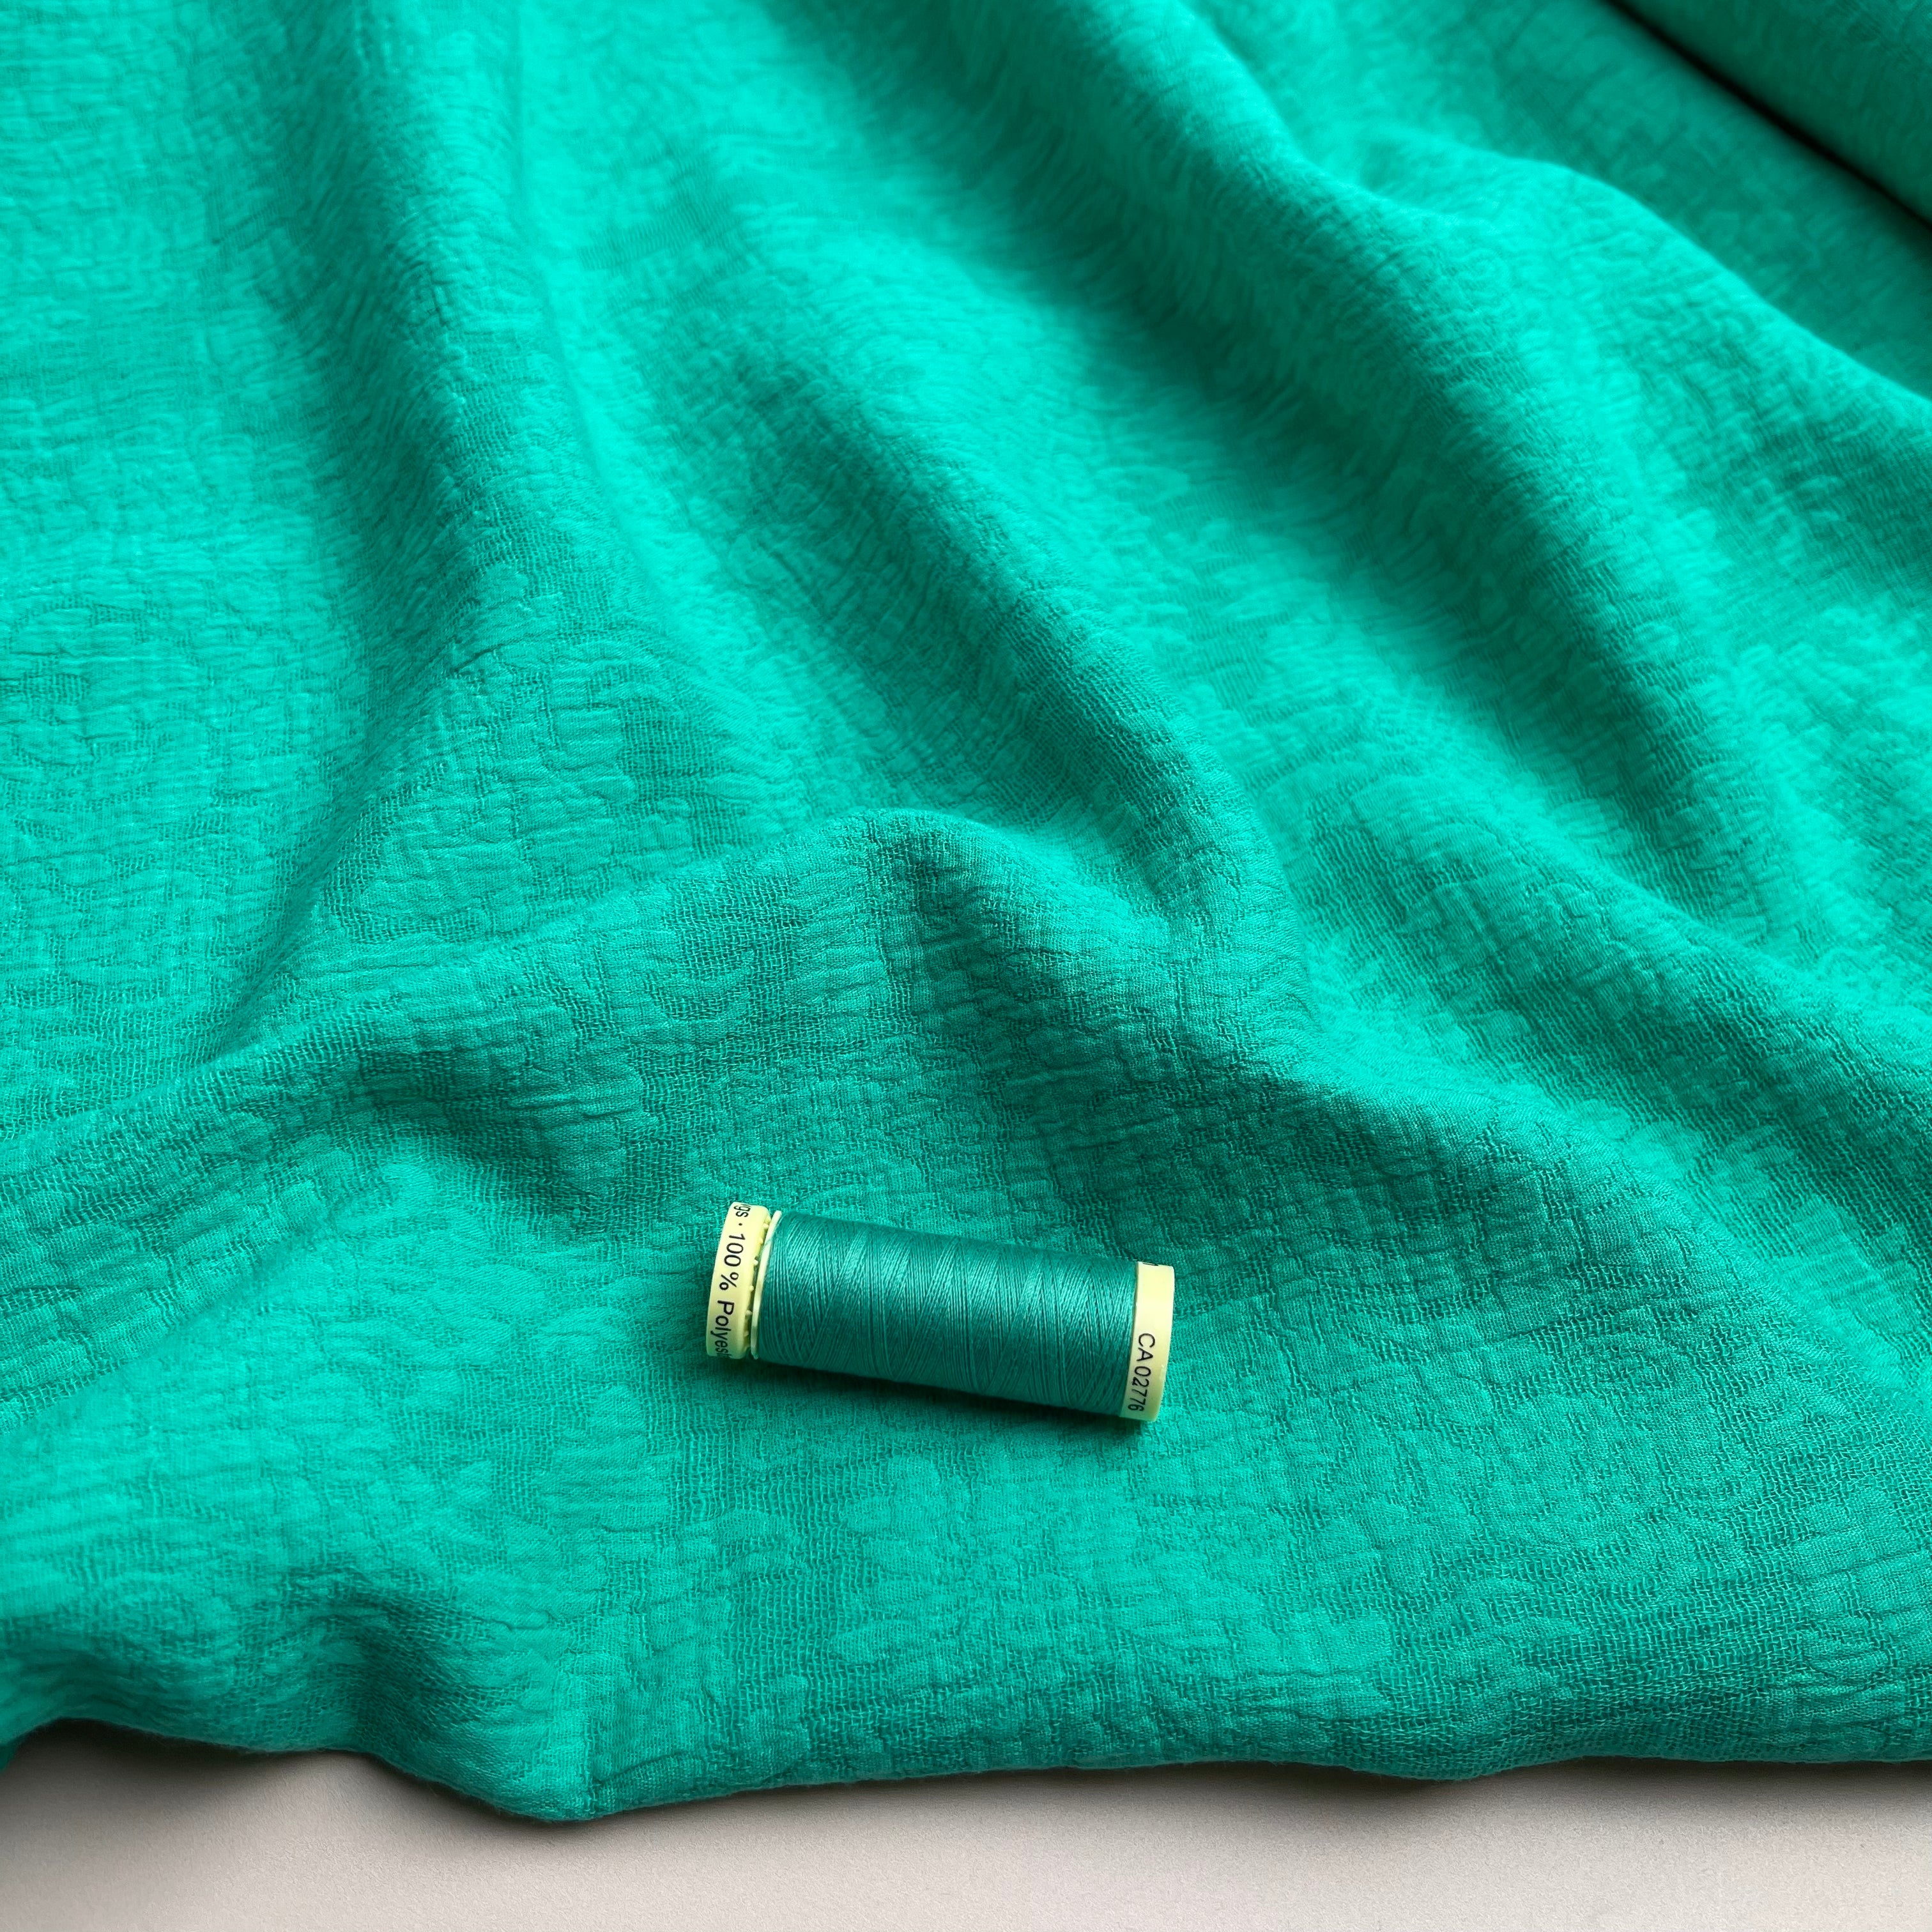 Damask Emerald Cotton Linen Jacquard Fabric